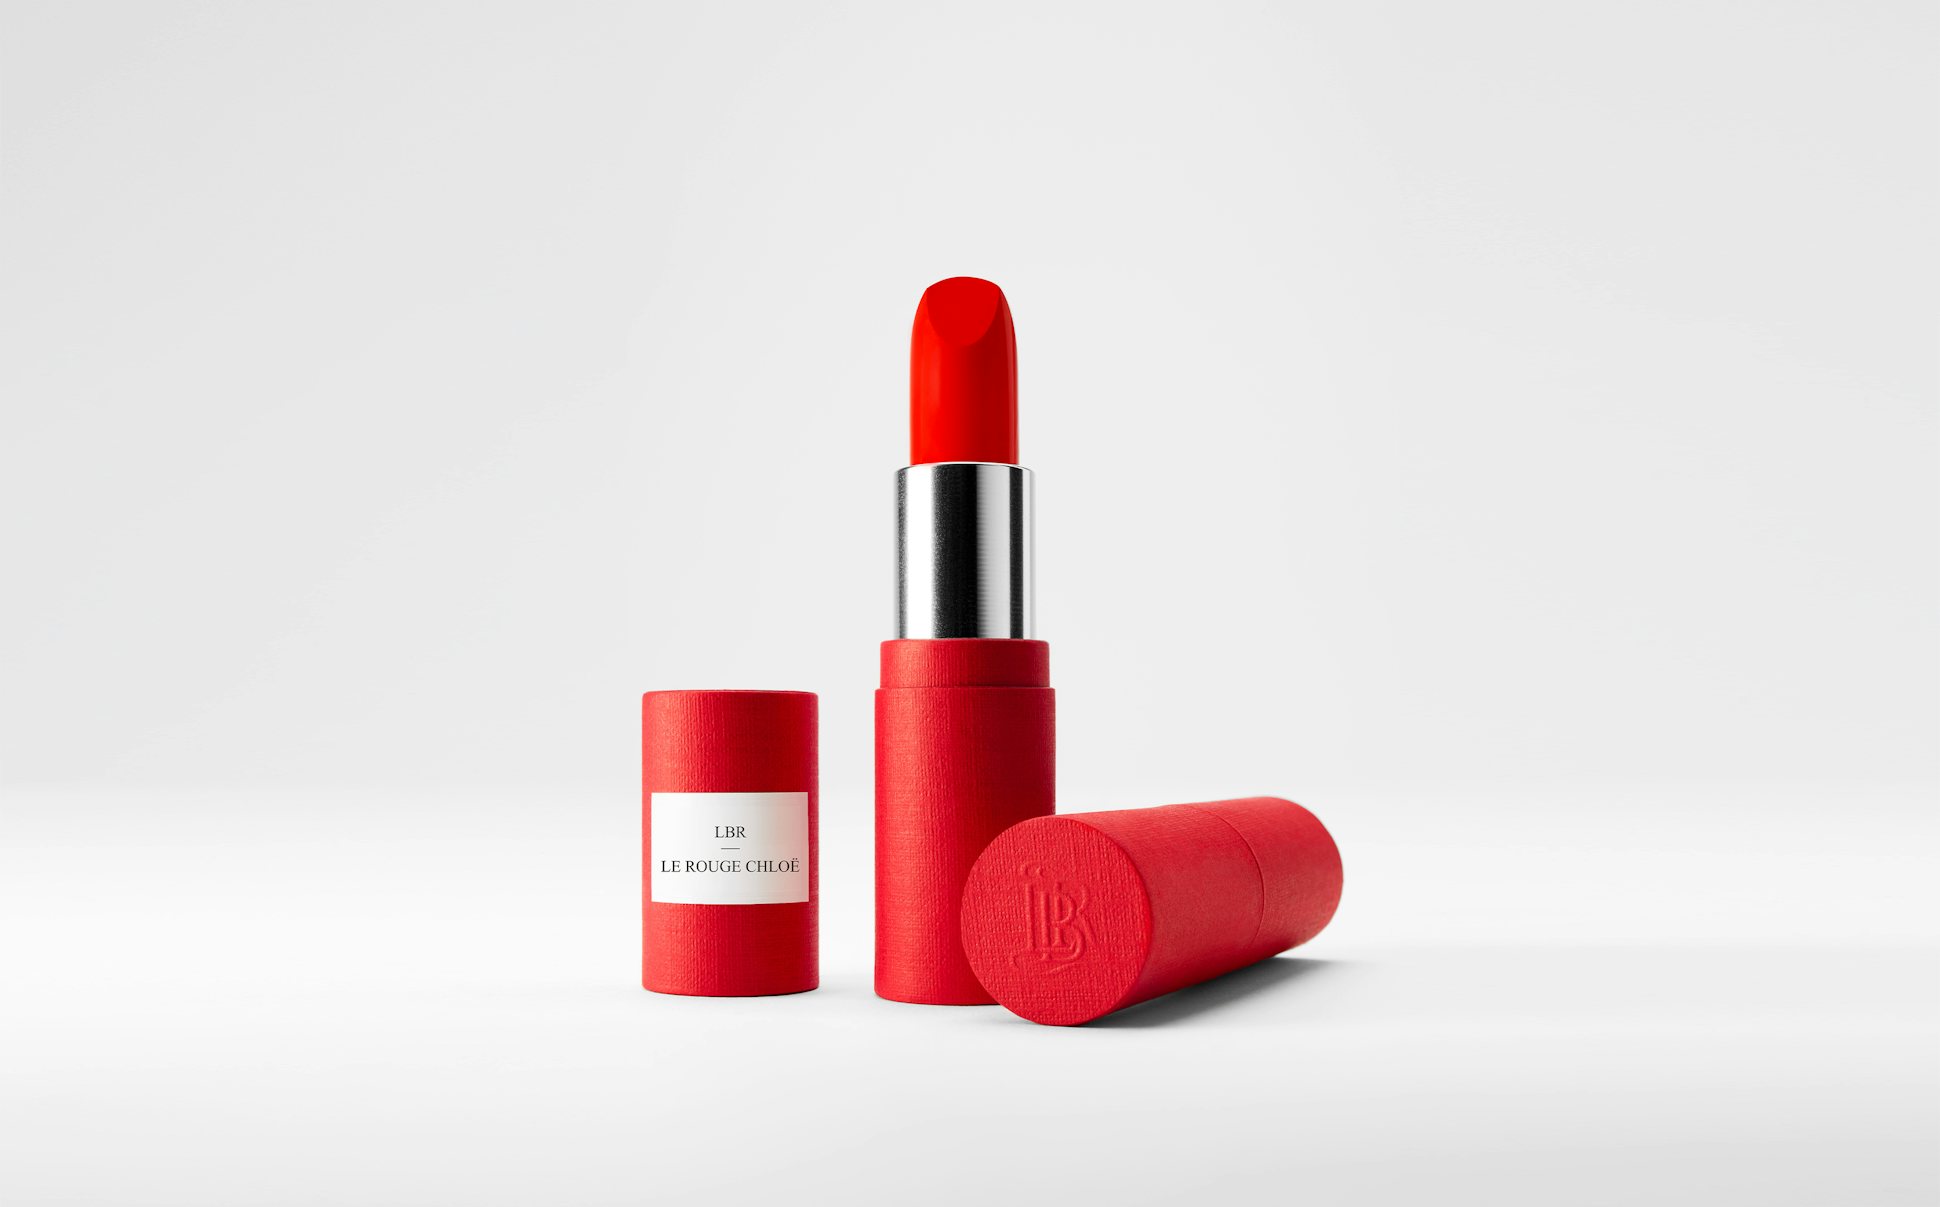 La bouche rouge Le Rouge Chloë lipstick in the red paper case